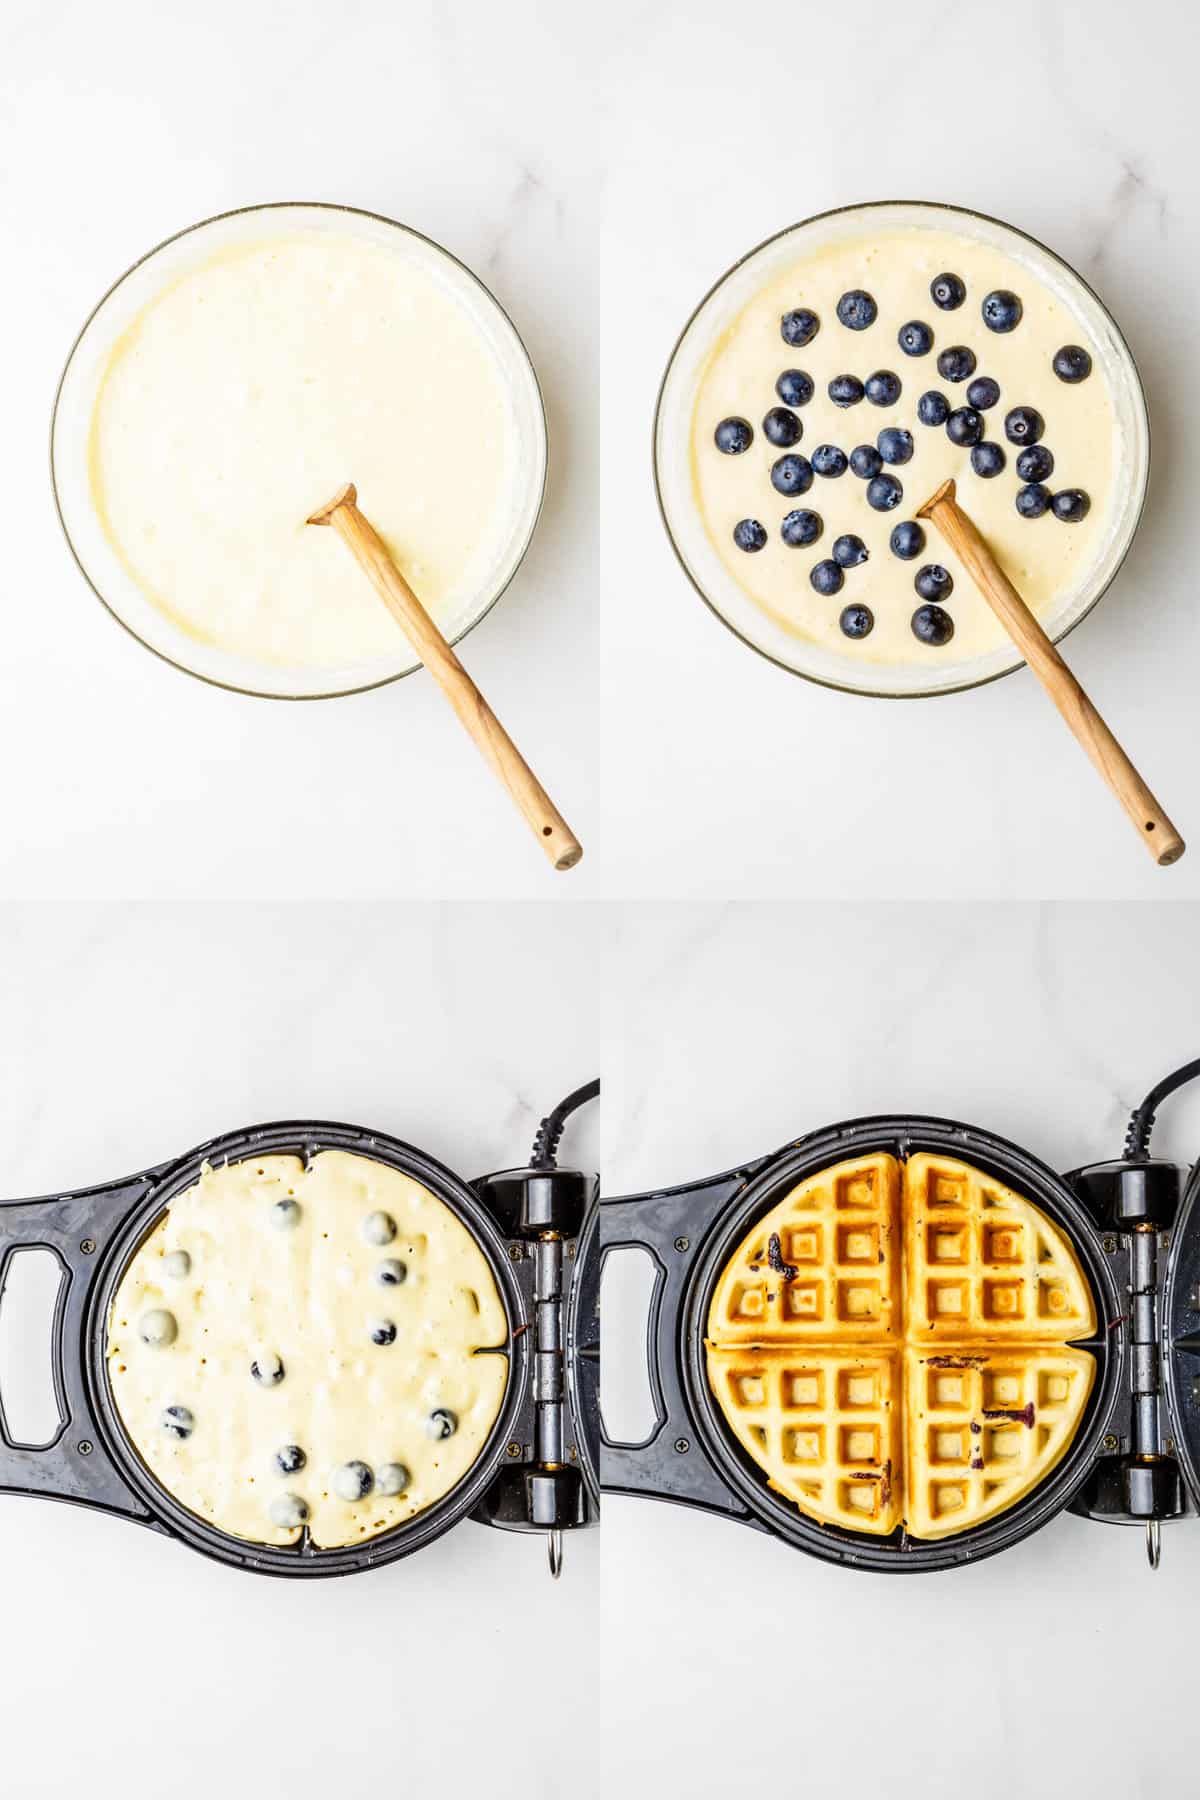 steps to make homemade blueberry waffles